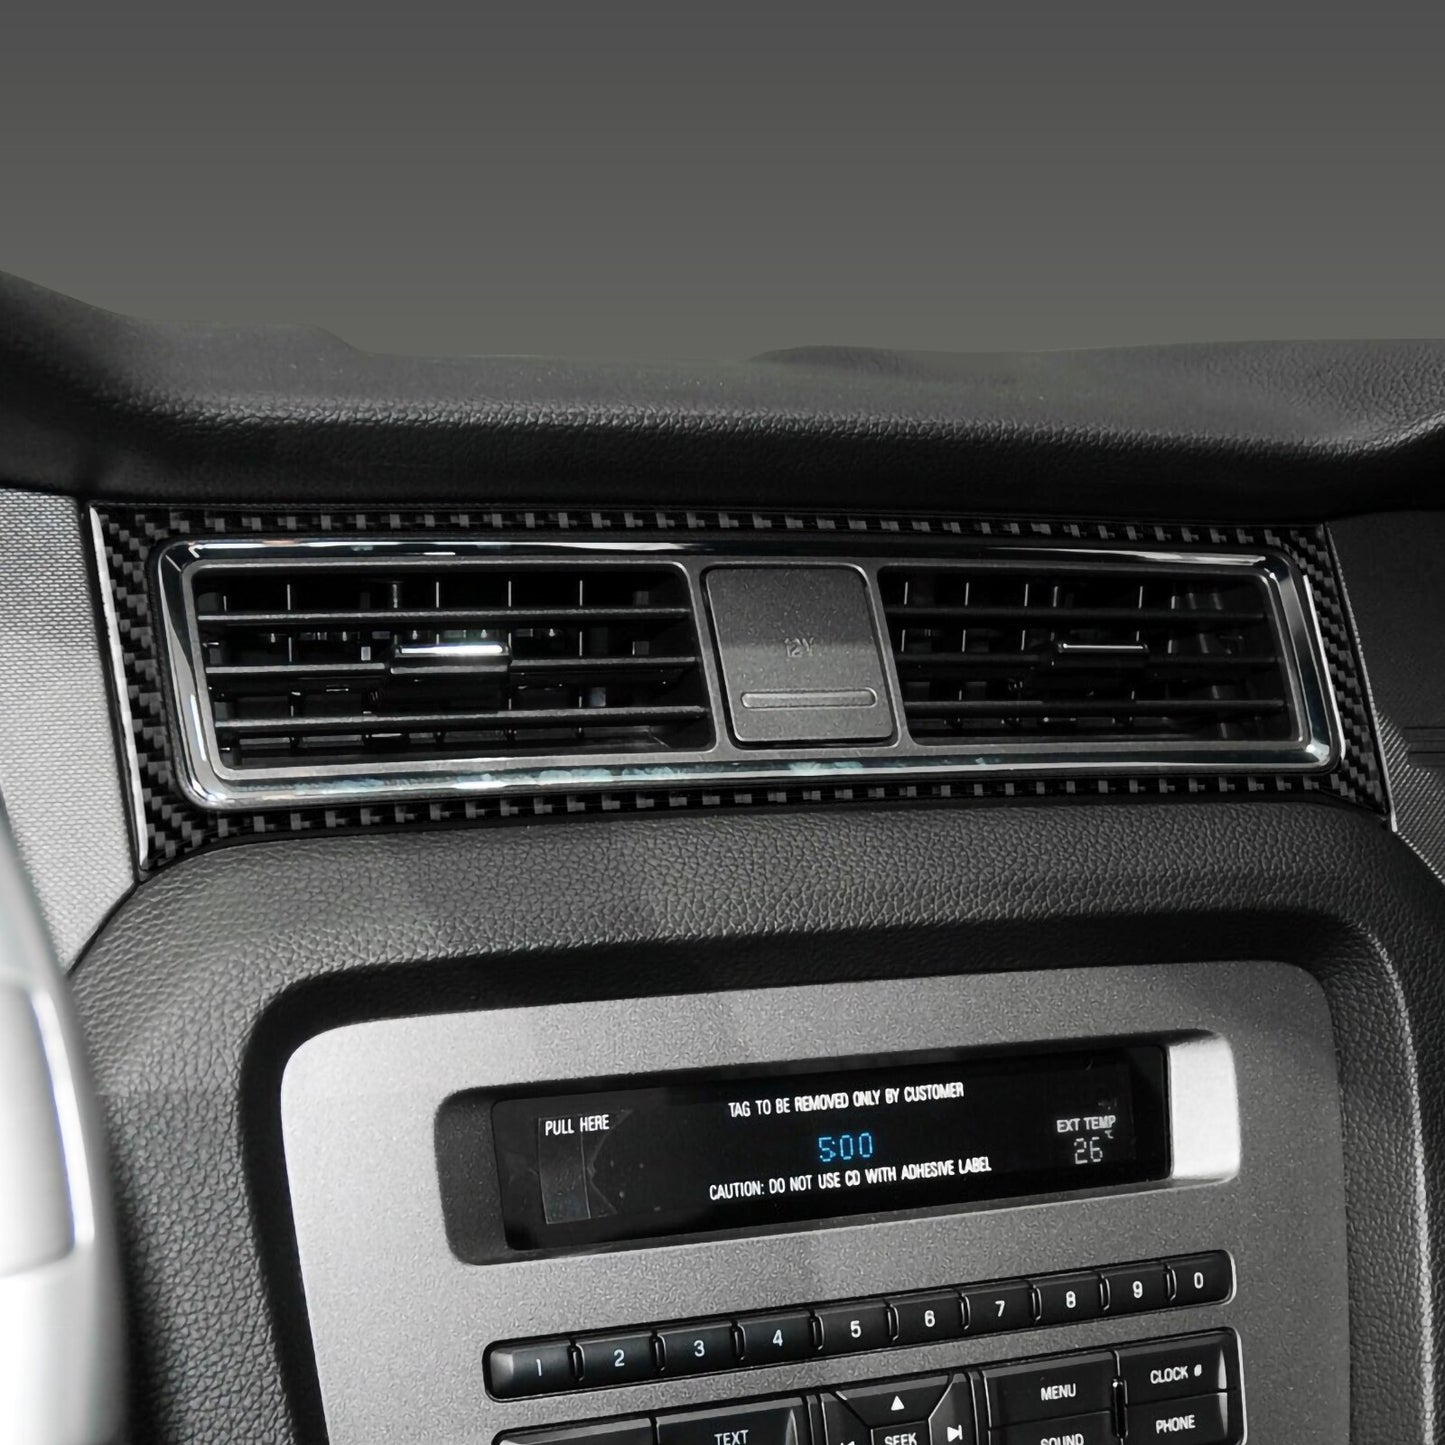 S197 Mustang Carbon Interior Dash (10-14)